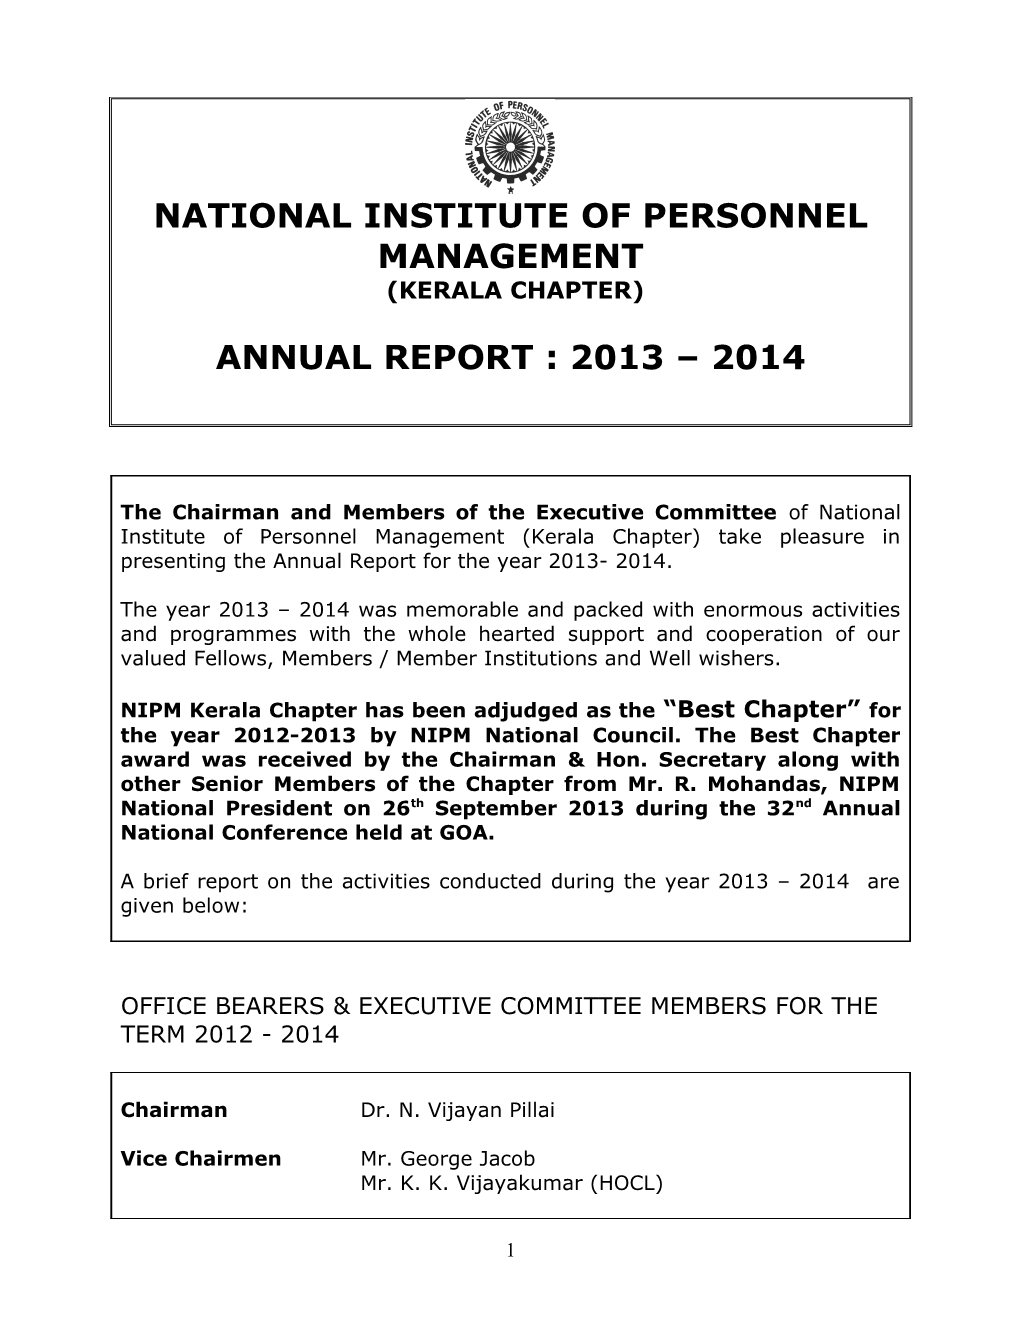 OFFICE BEARERS & EXECUTIVE COMMITTEE Membersfor the Term 2012-2014